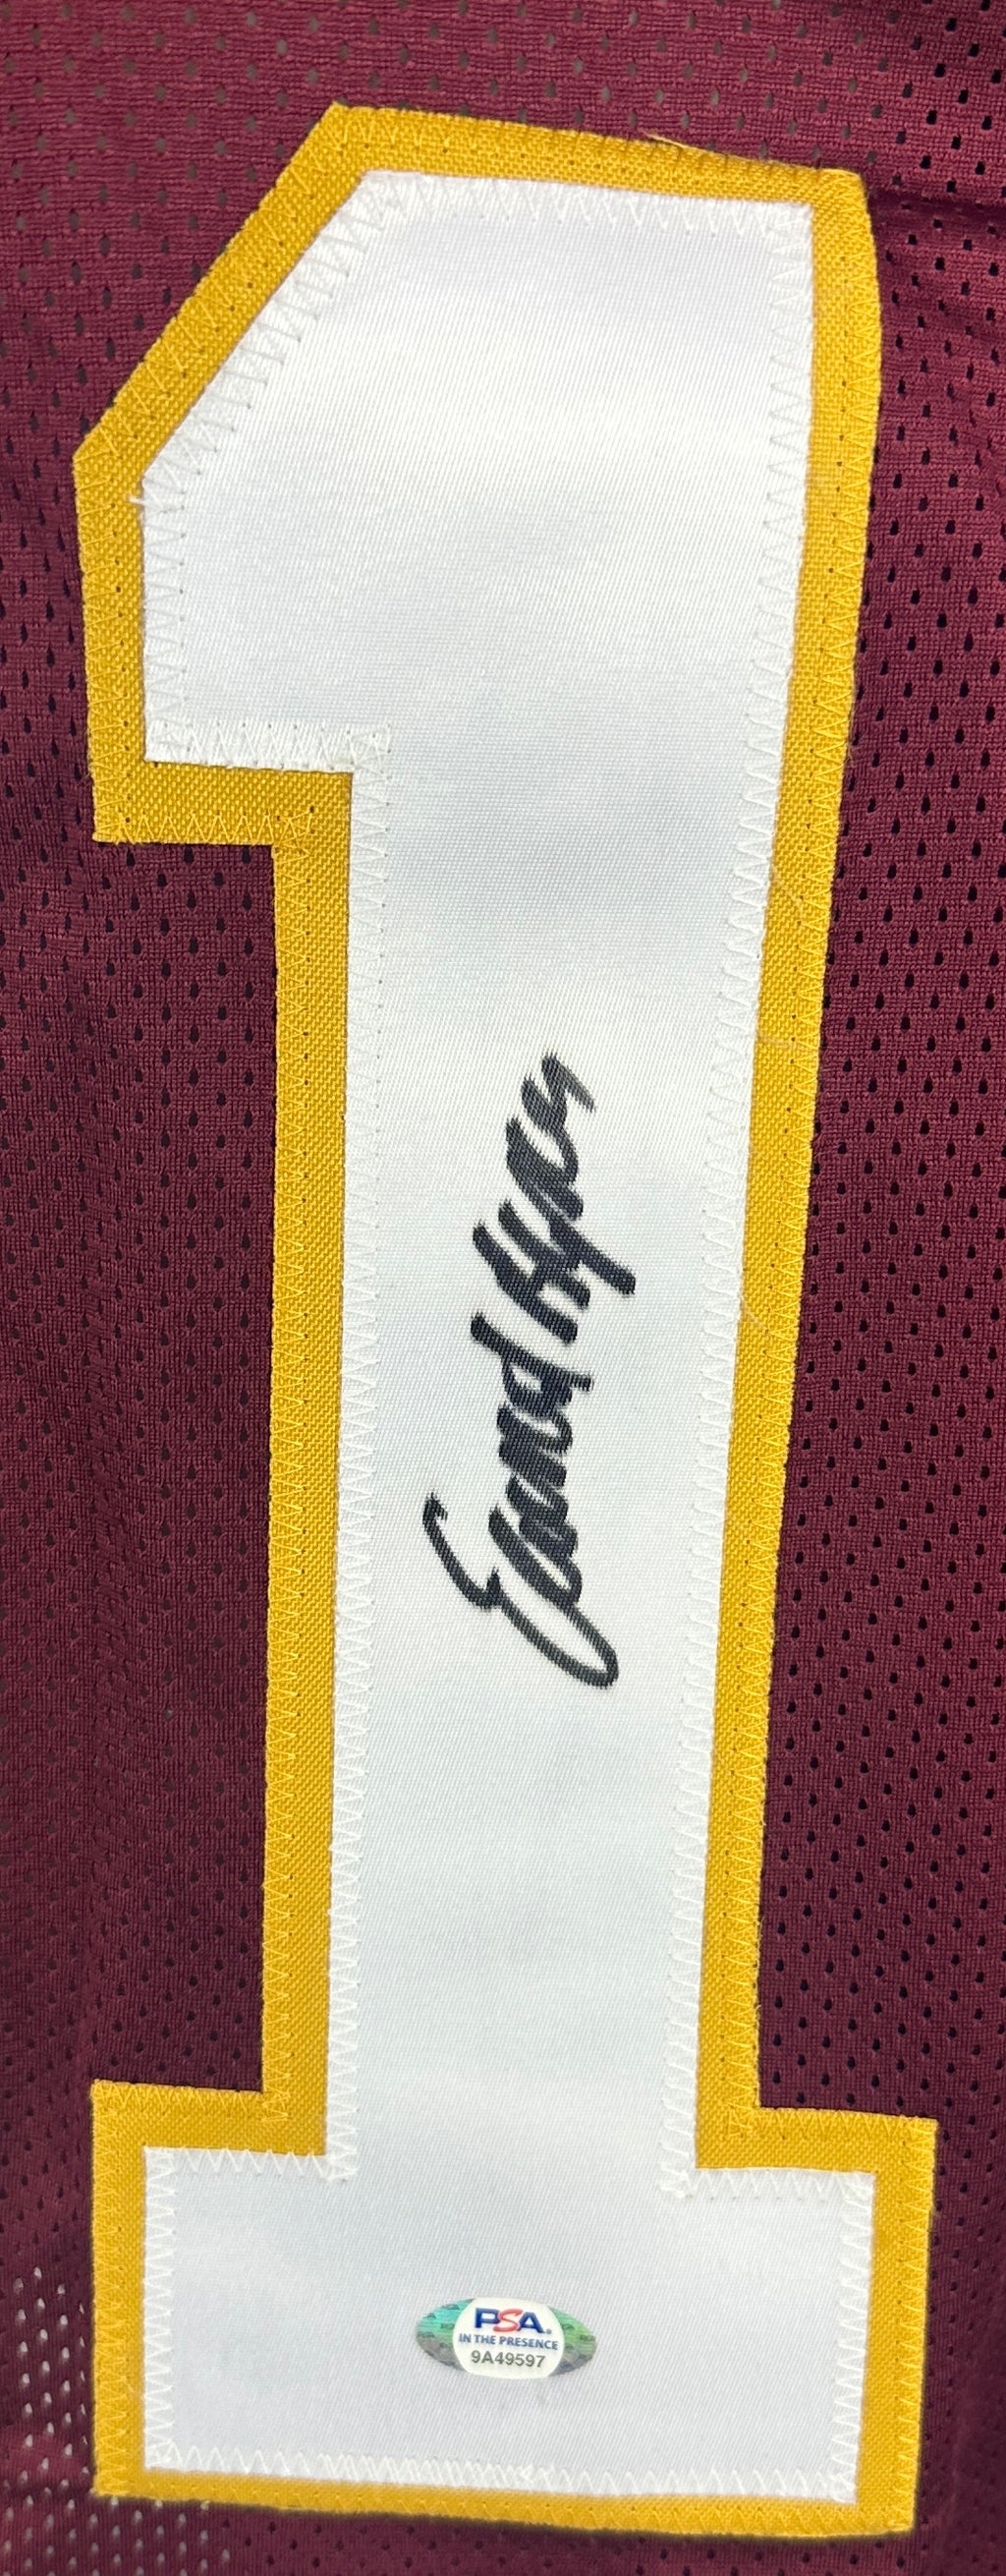 Earnest Byner autographed signed jersey NFL Washington Redskins PSA ITP COA